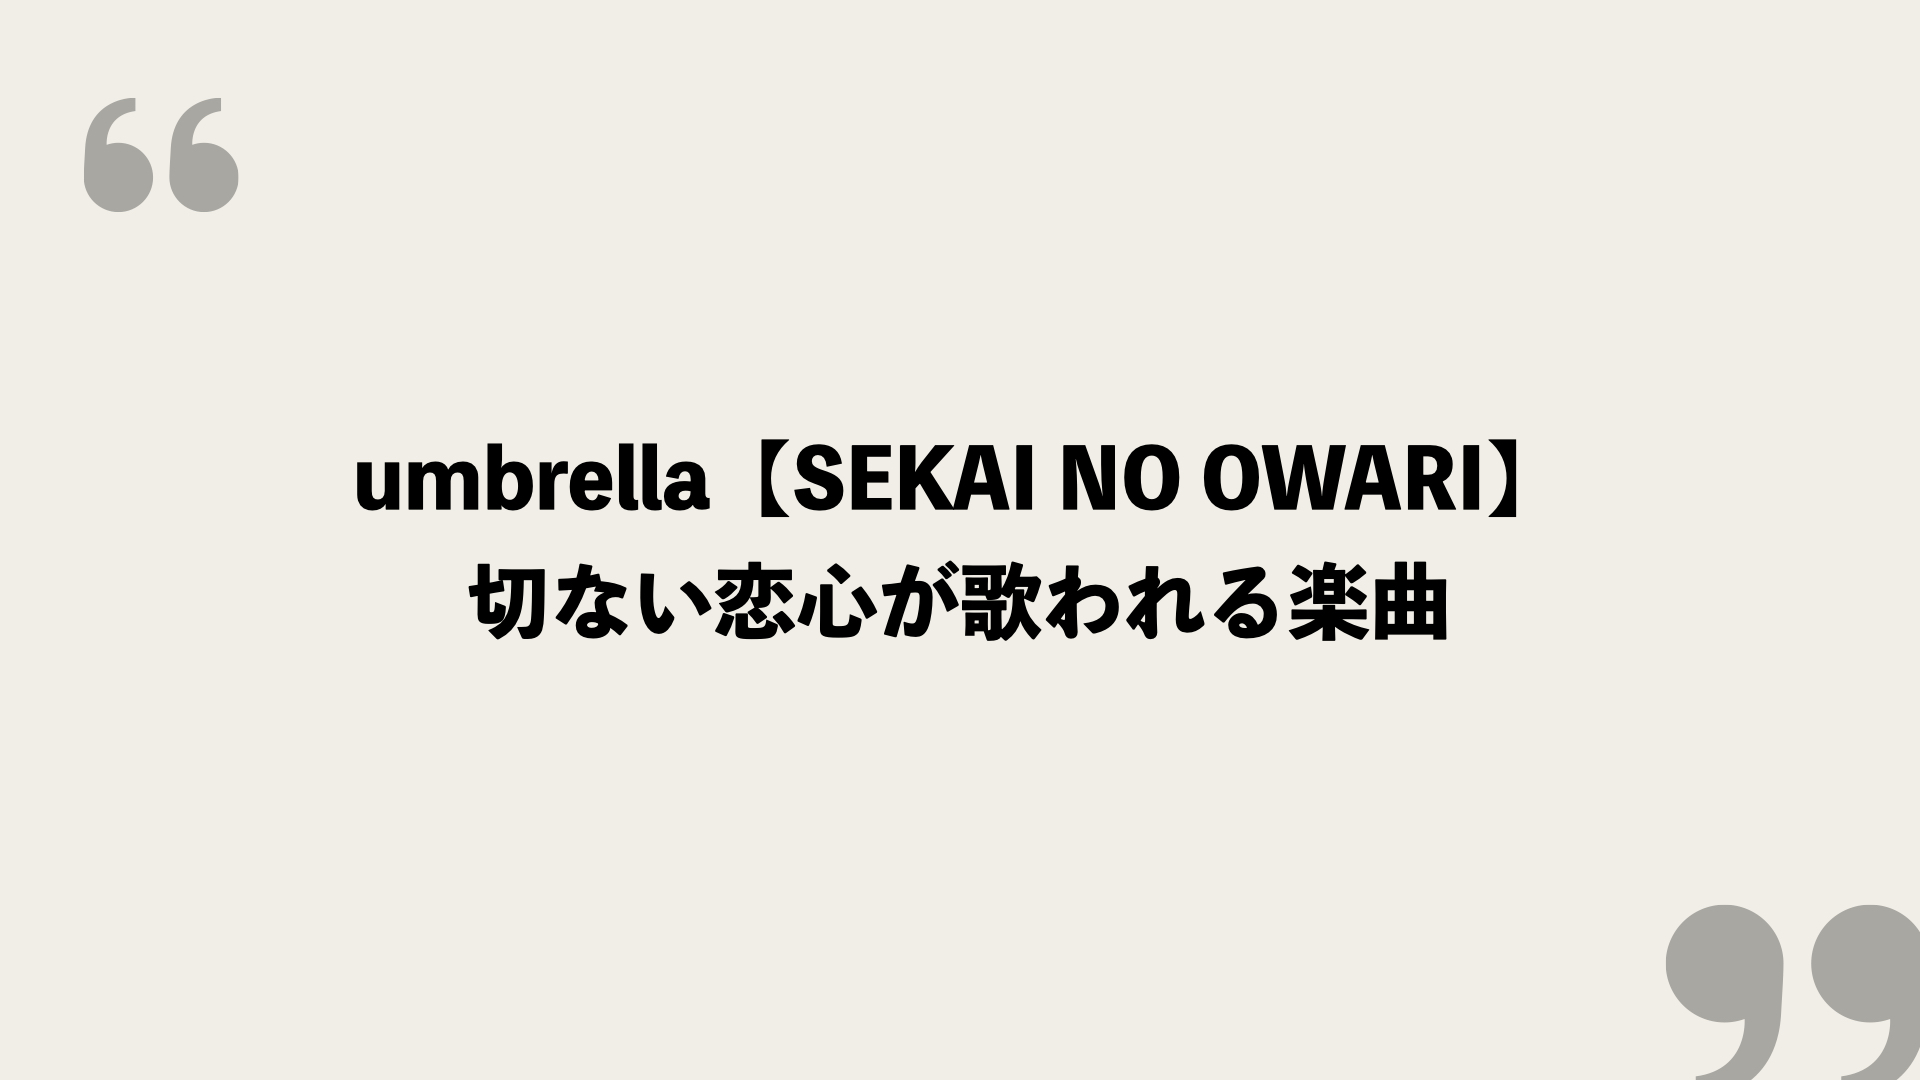 Umbrella Sekai No Owari 歌詞の意味を考察 切ない恋心が歌われる楽曲 Framu Media